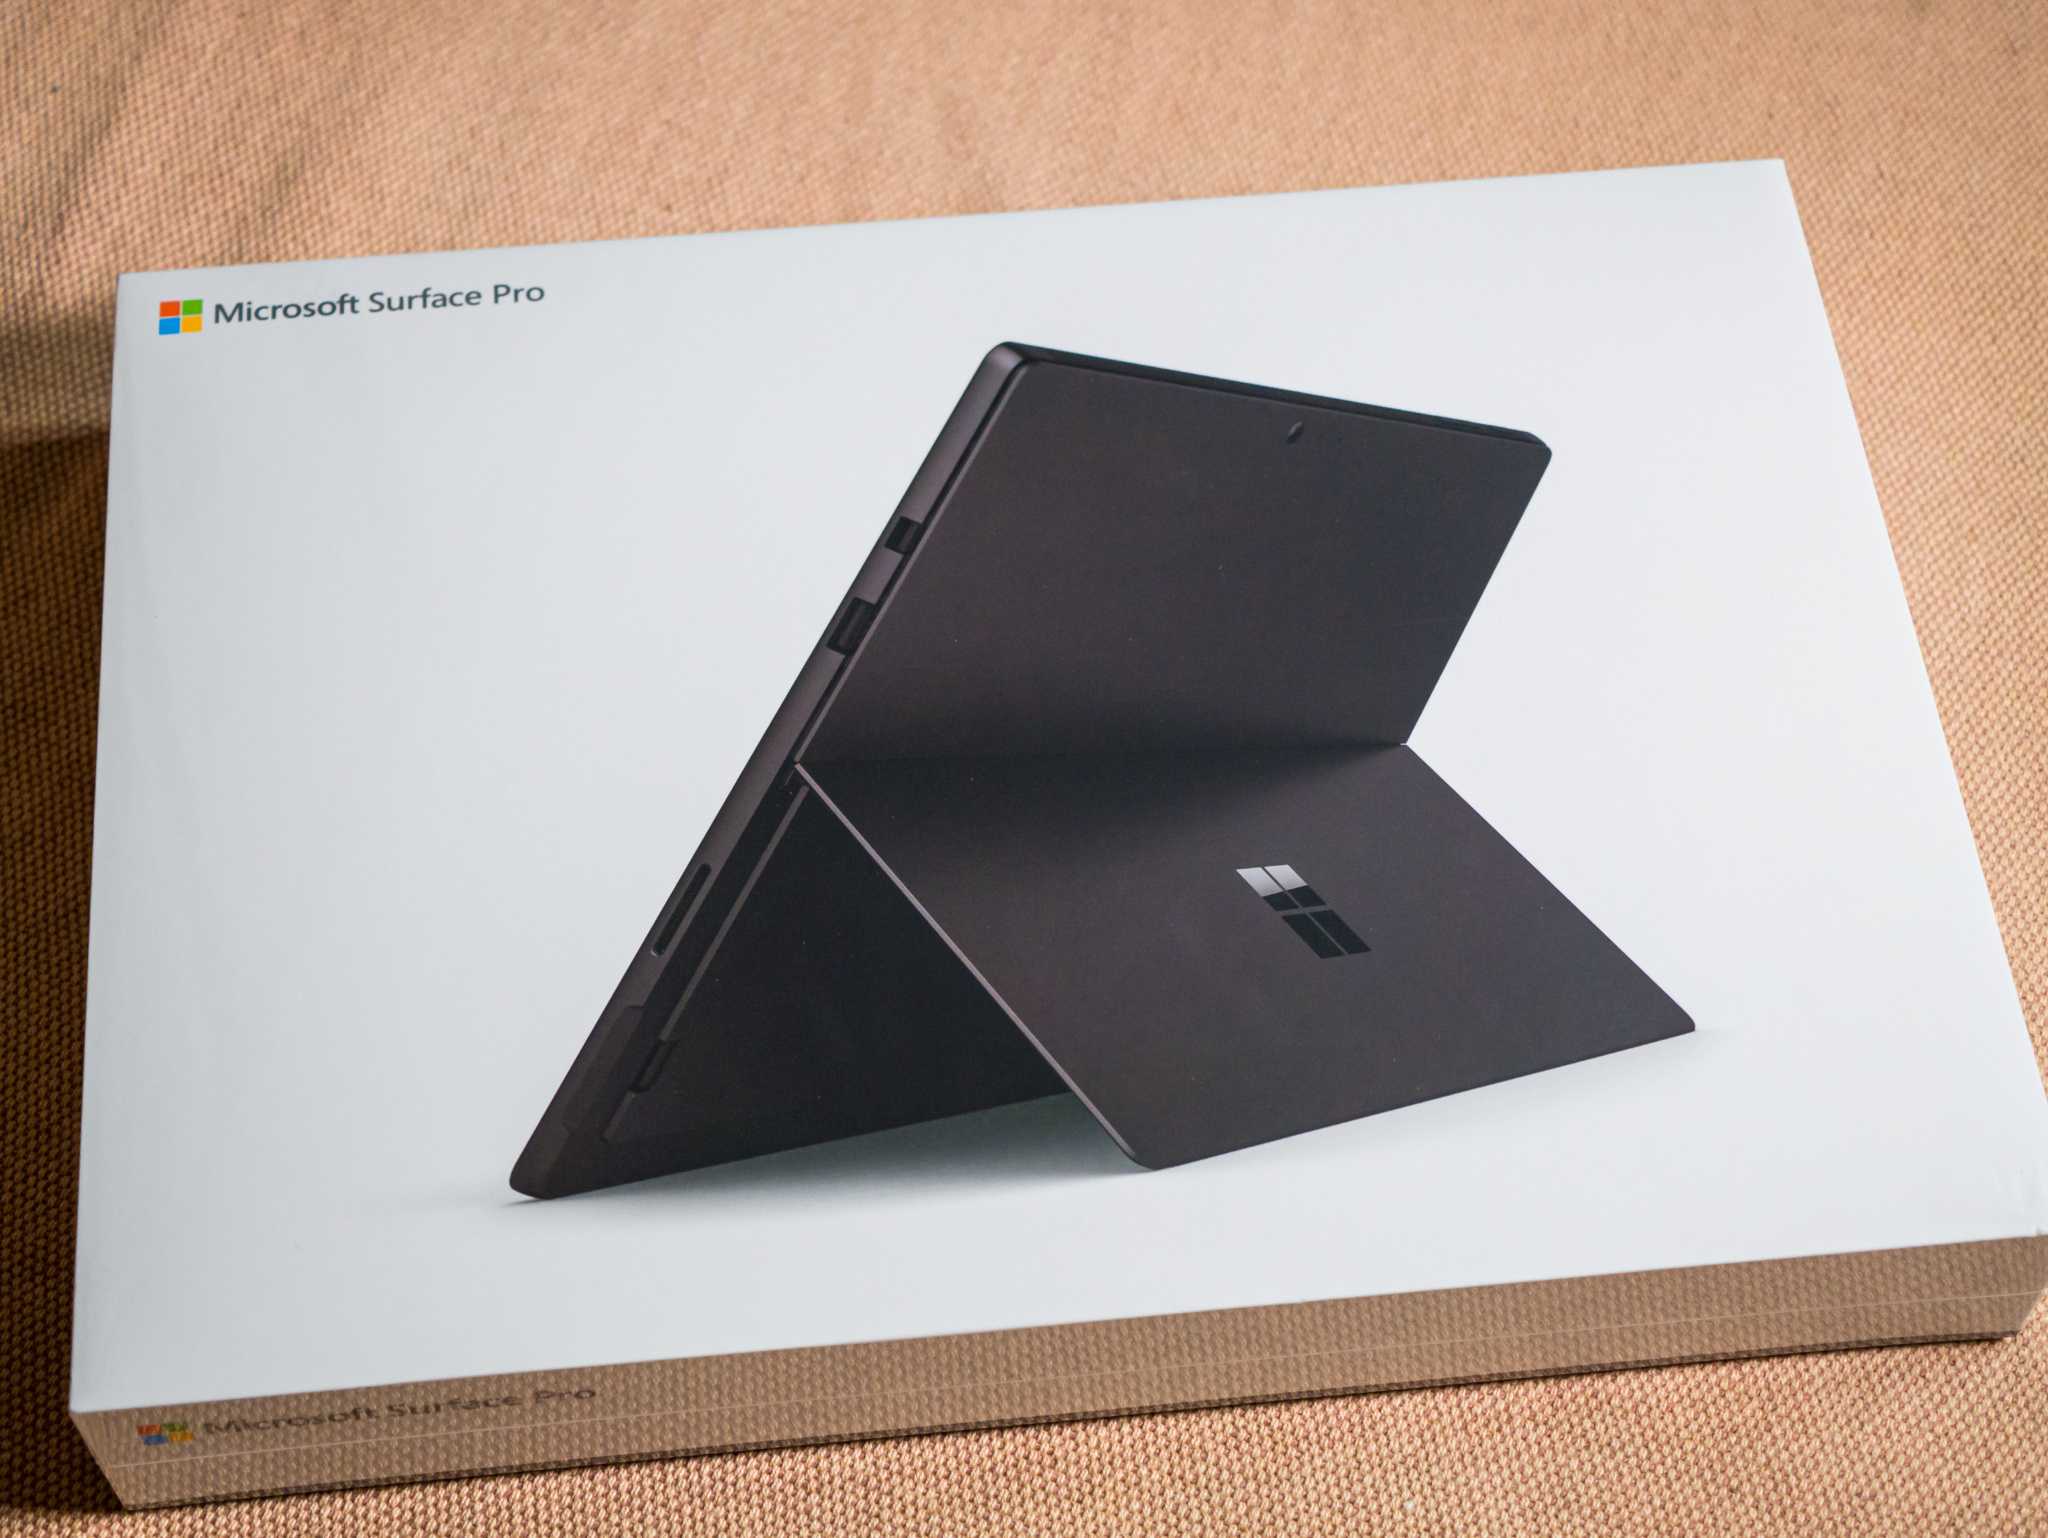 Microsoft surface touch cover 32gb black - купить , скидки, цена, отзывы, обзор, характеристики - планшеты